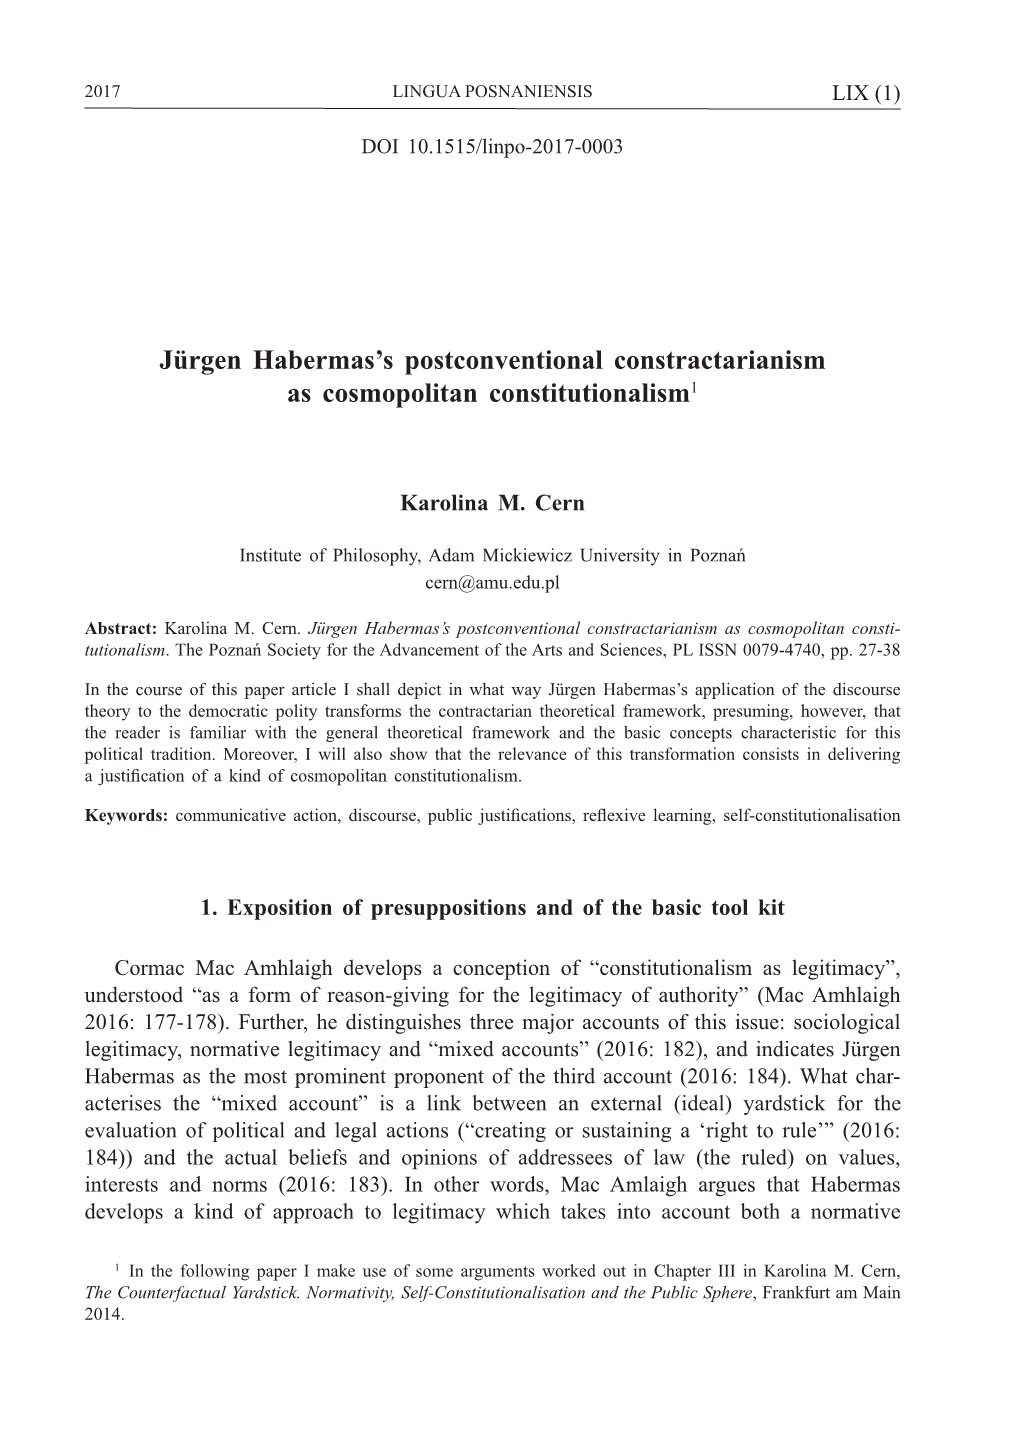 Jürgen Habermas's Postconventional Constractarianism As Cosmopolitan